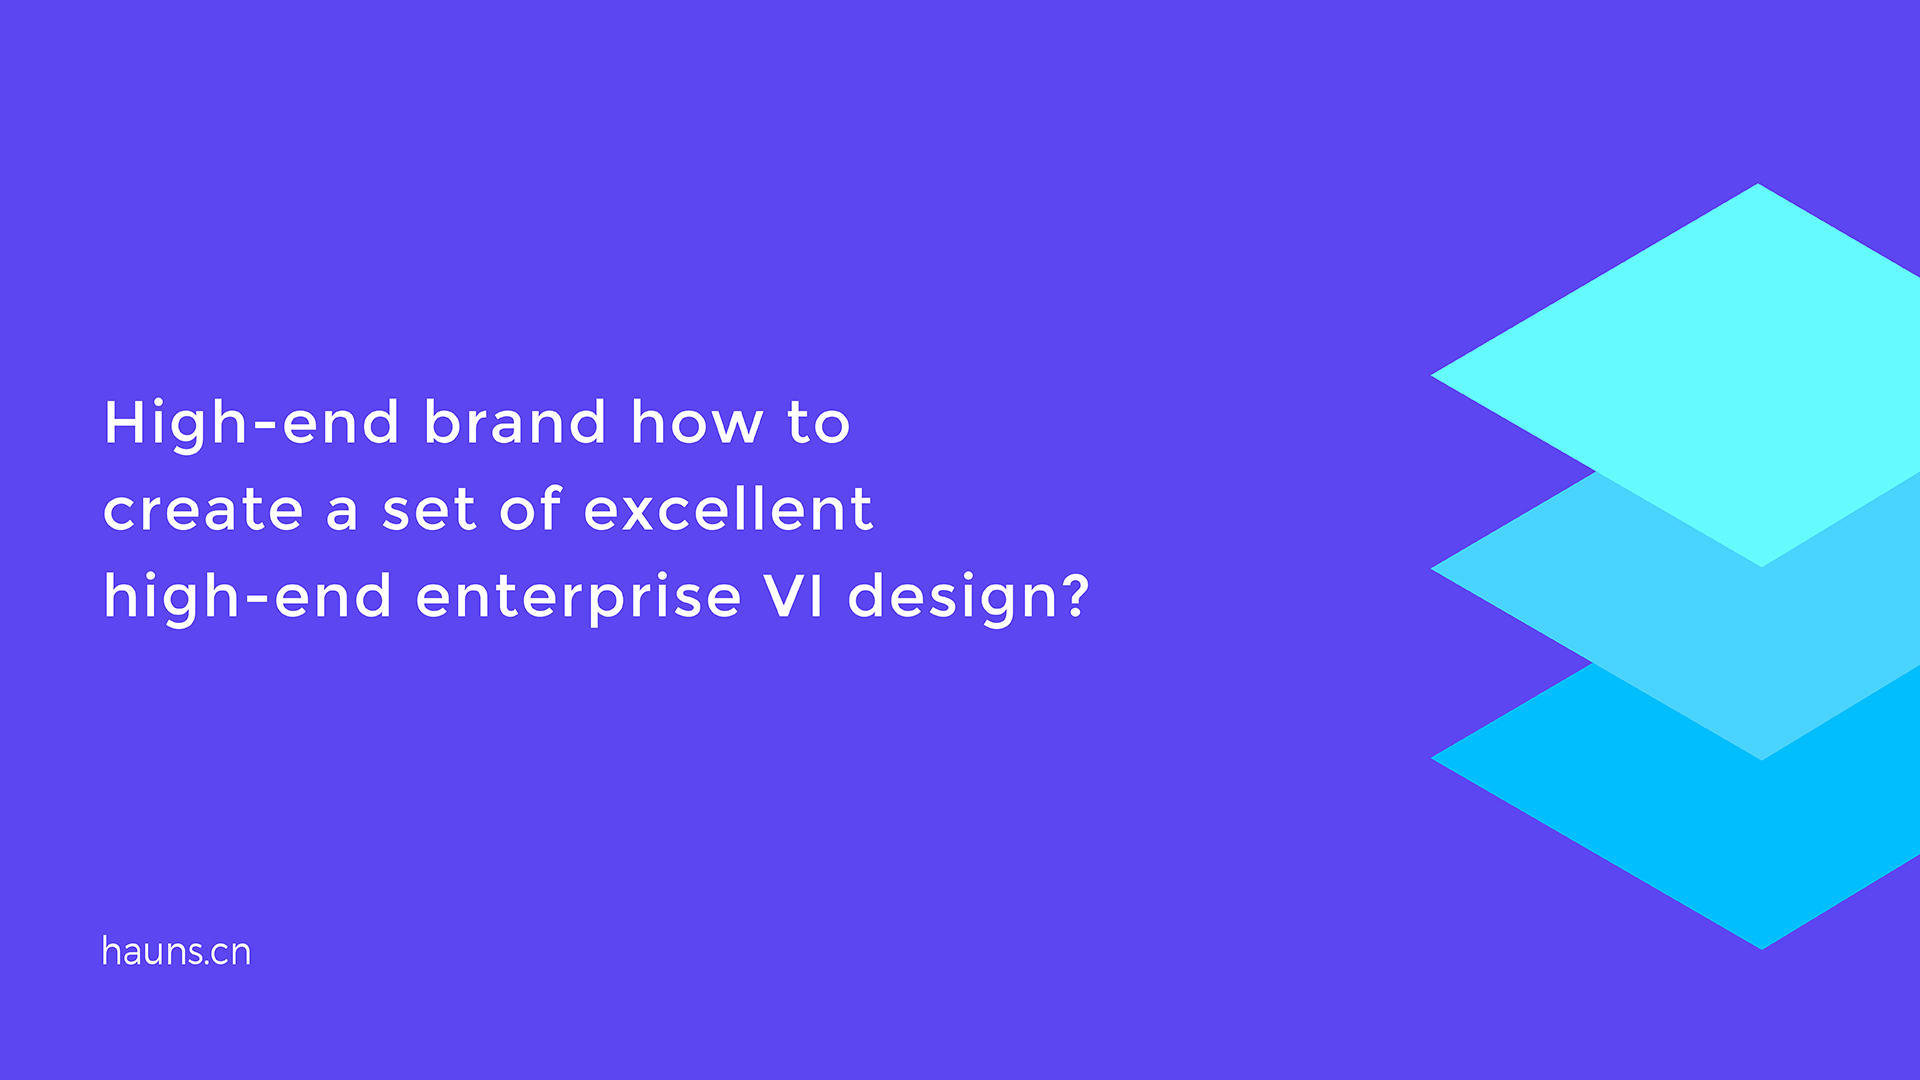 Hauns - Brand visual brand identity _visual brand identity _ Brand planning visual brand identity